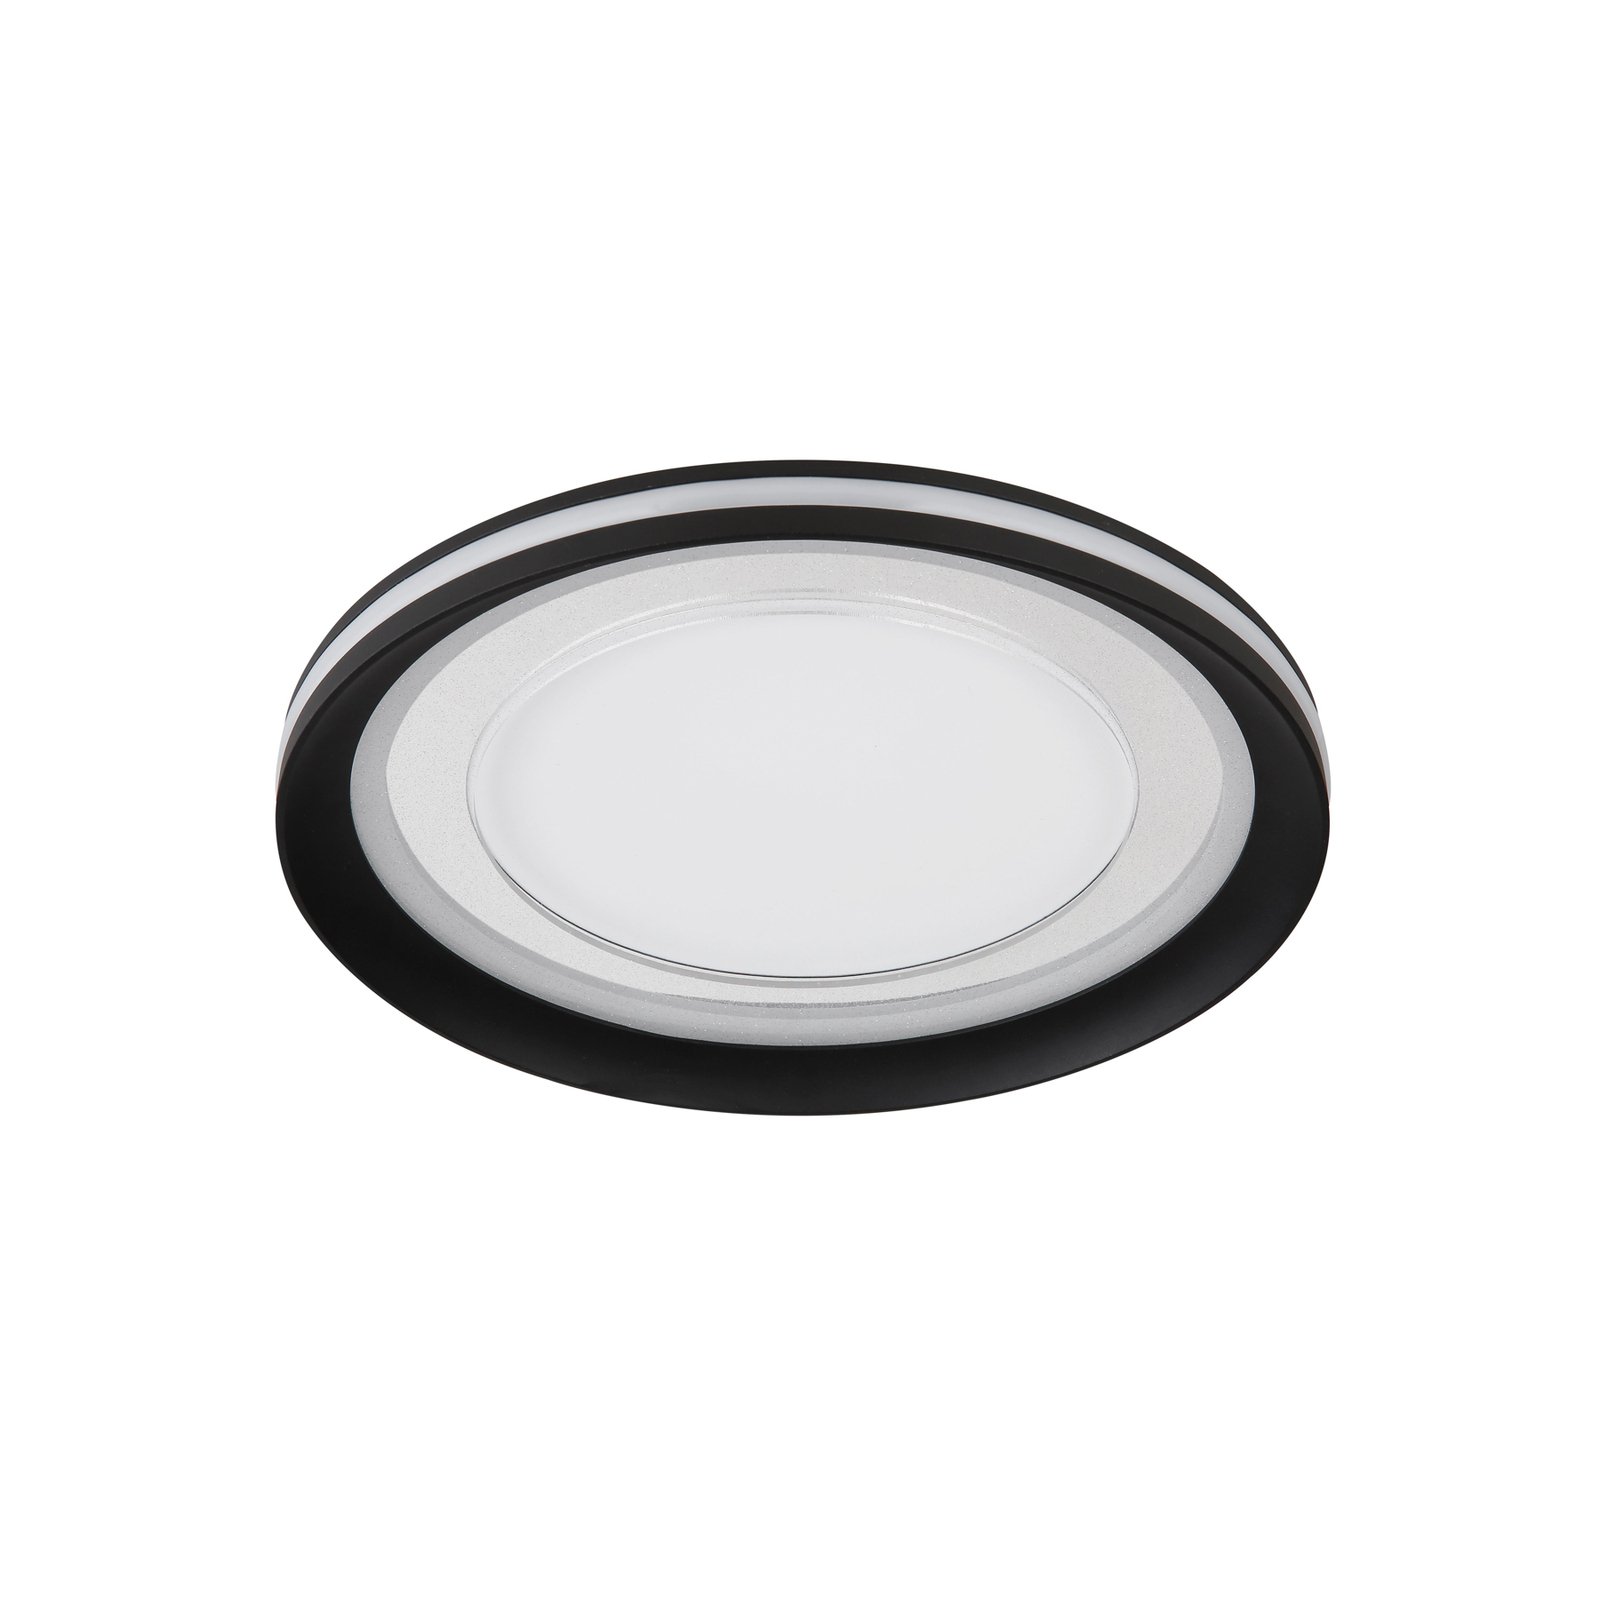 Clarino LED ceiling light, Ø 36 cm, black/white, acrylic